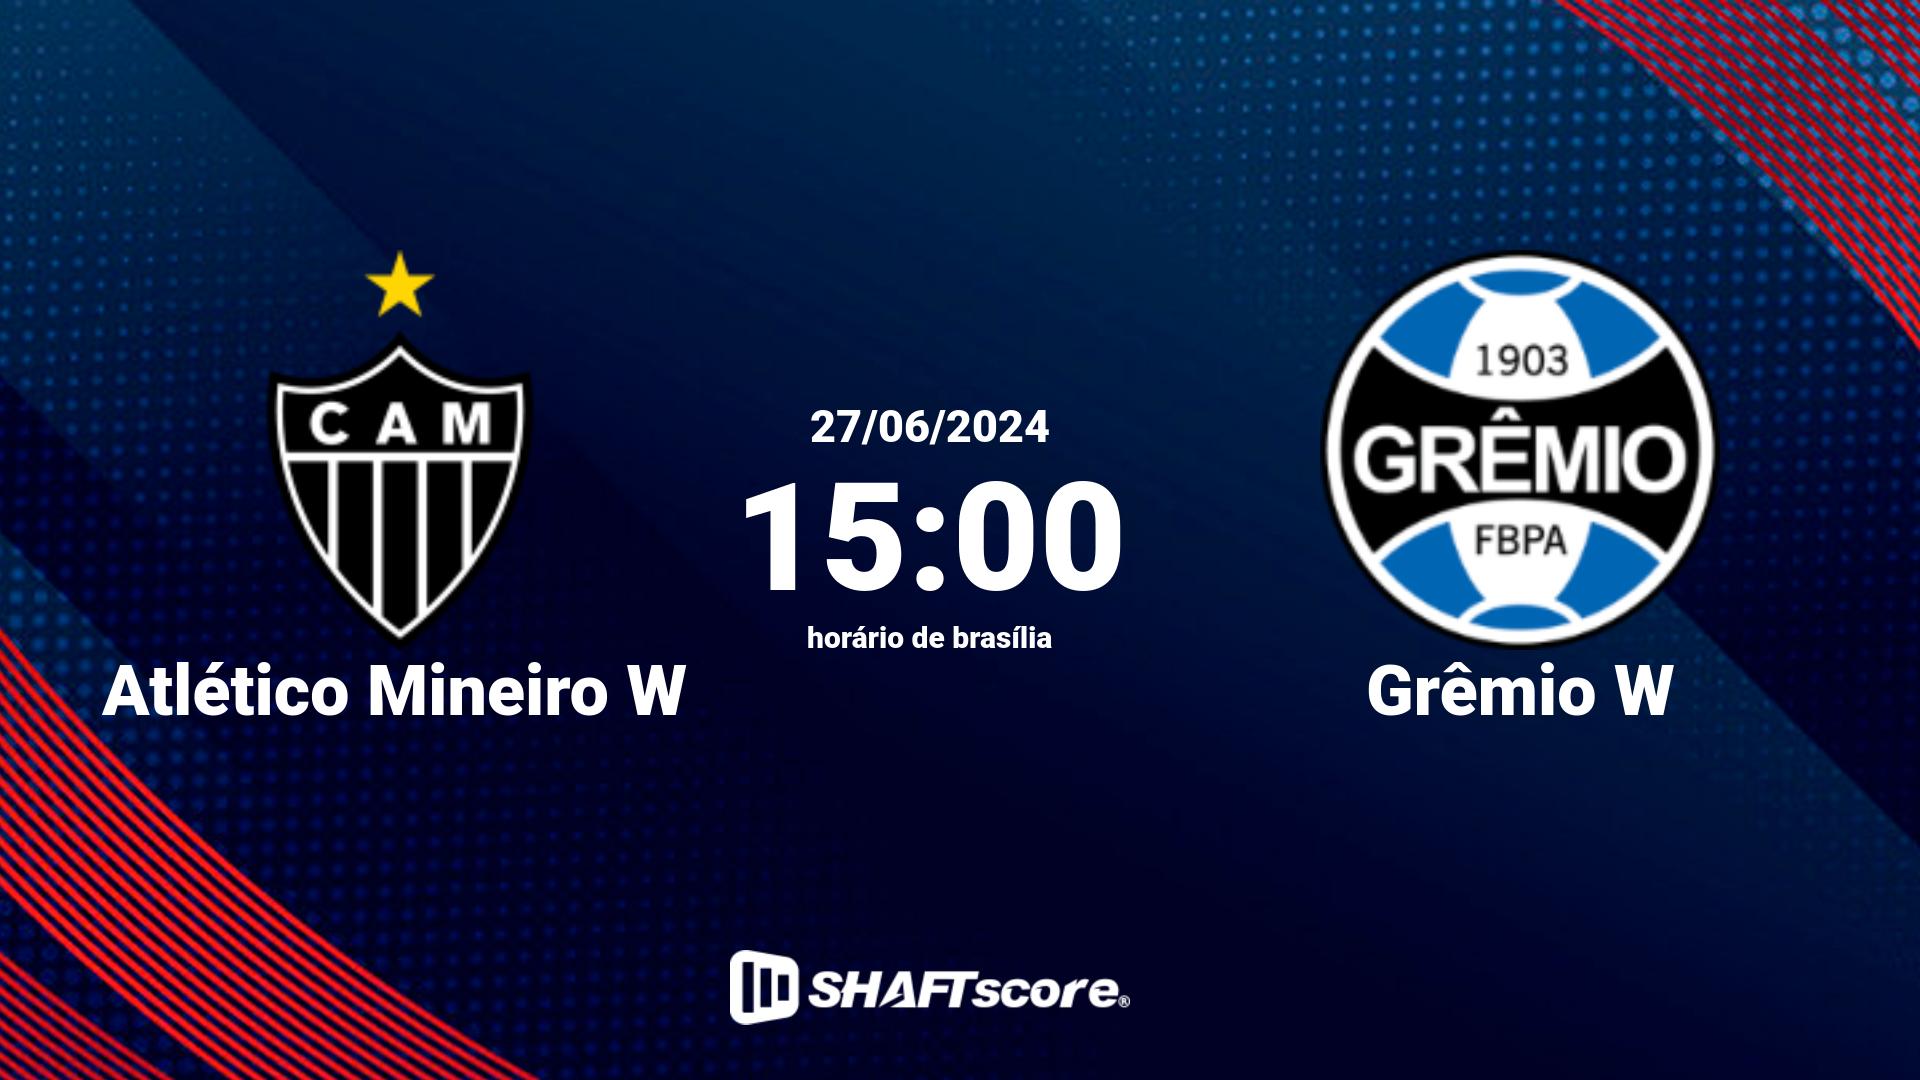 Estatísticas do jogo Atlético Mineiro W vs Grêmio W 18.05 15:00